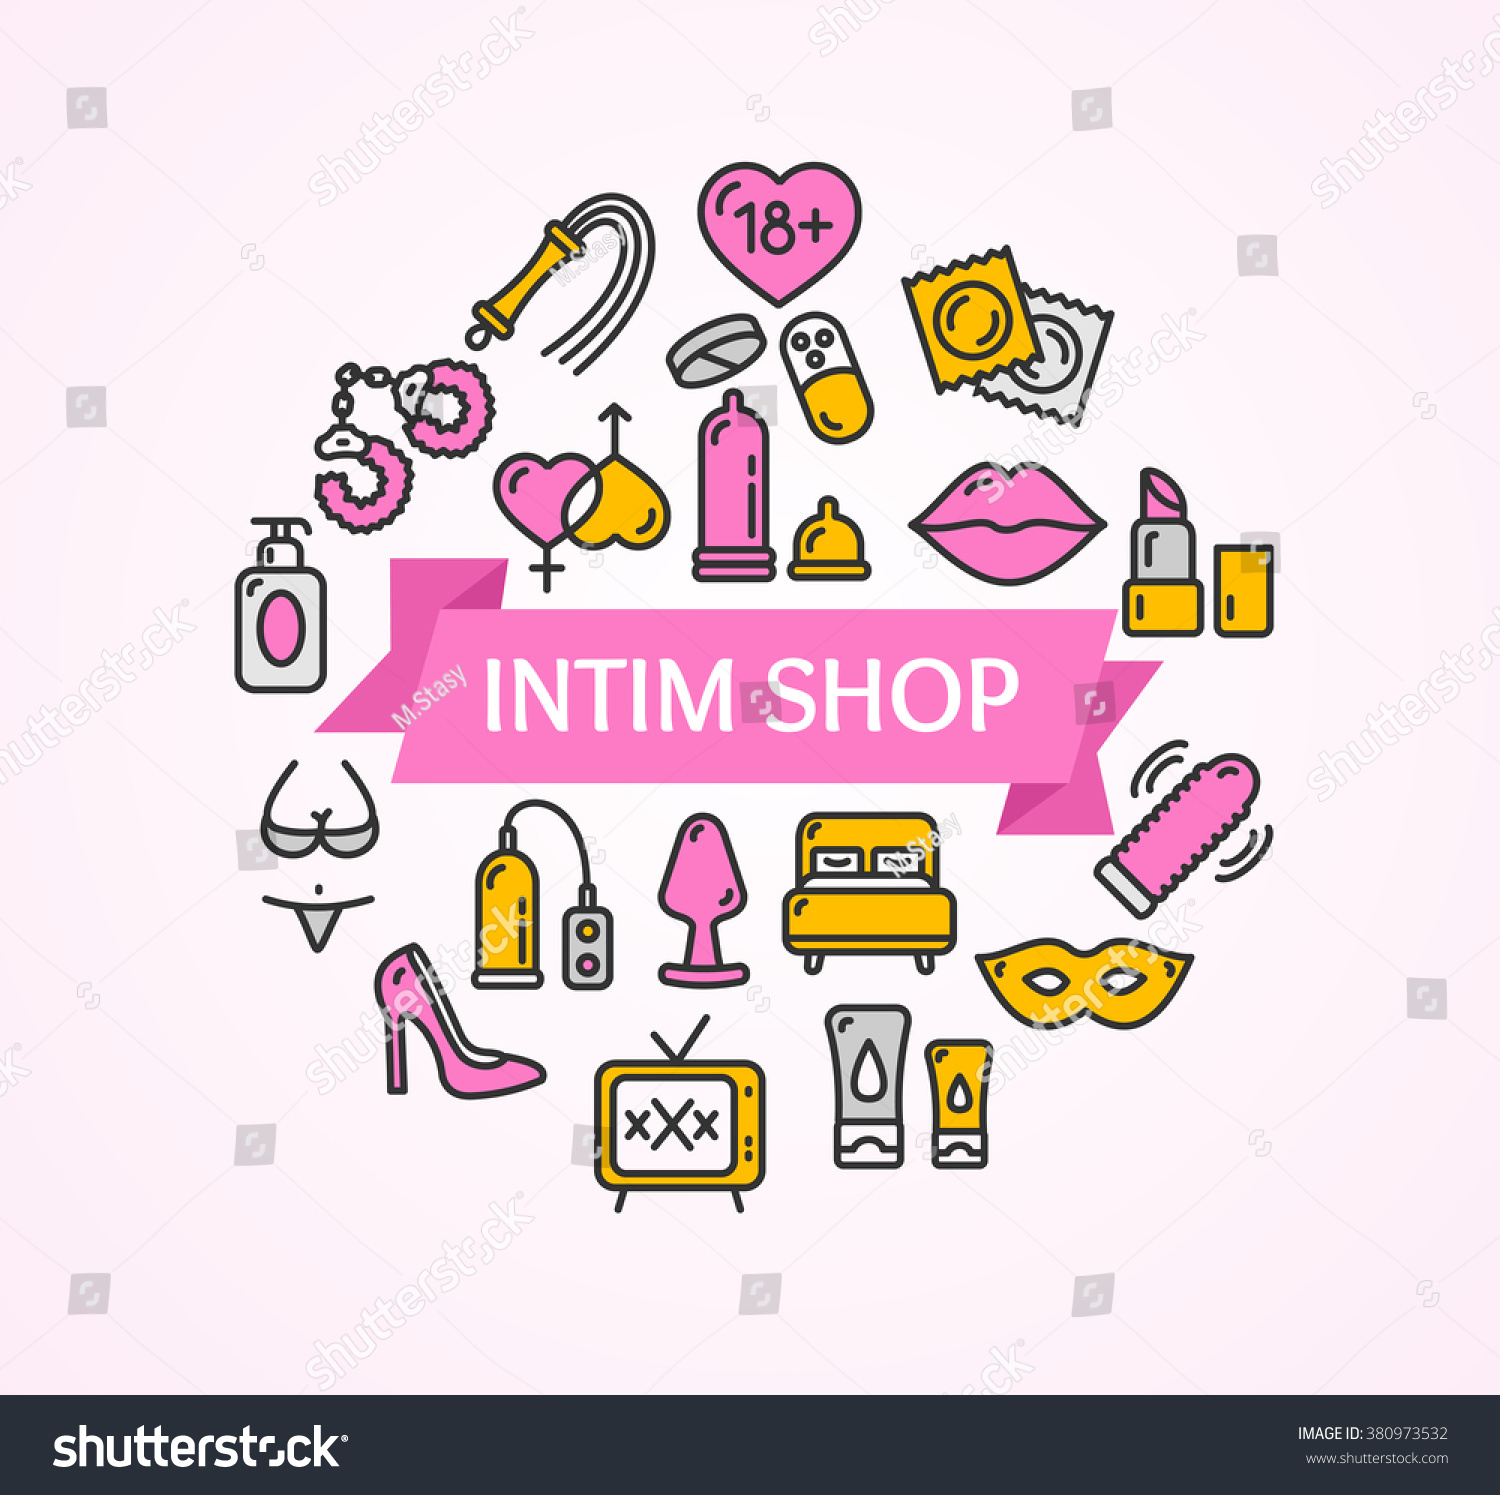 Intim Sex Shop Concept Vector Illustration Stock Vector Royalty Free 380973532 